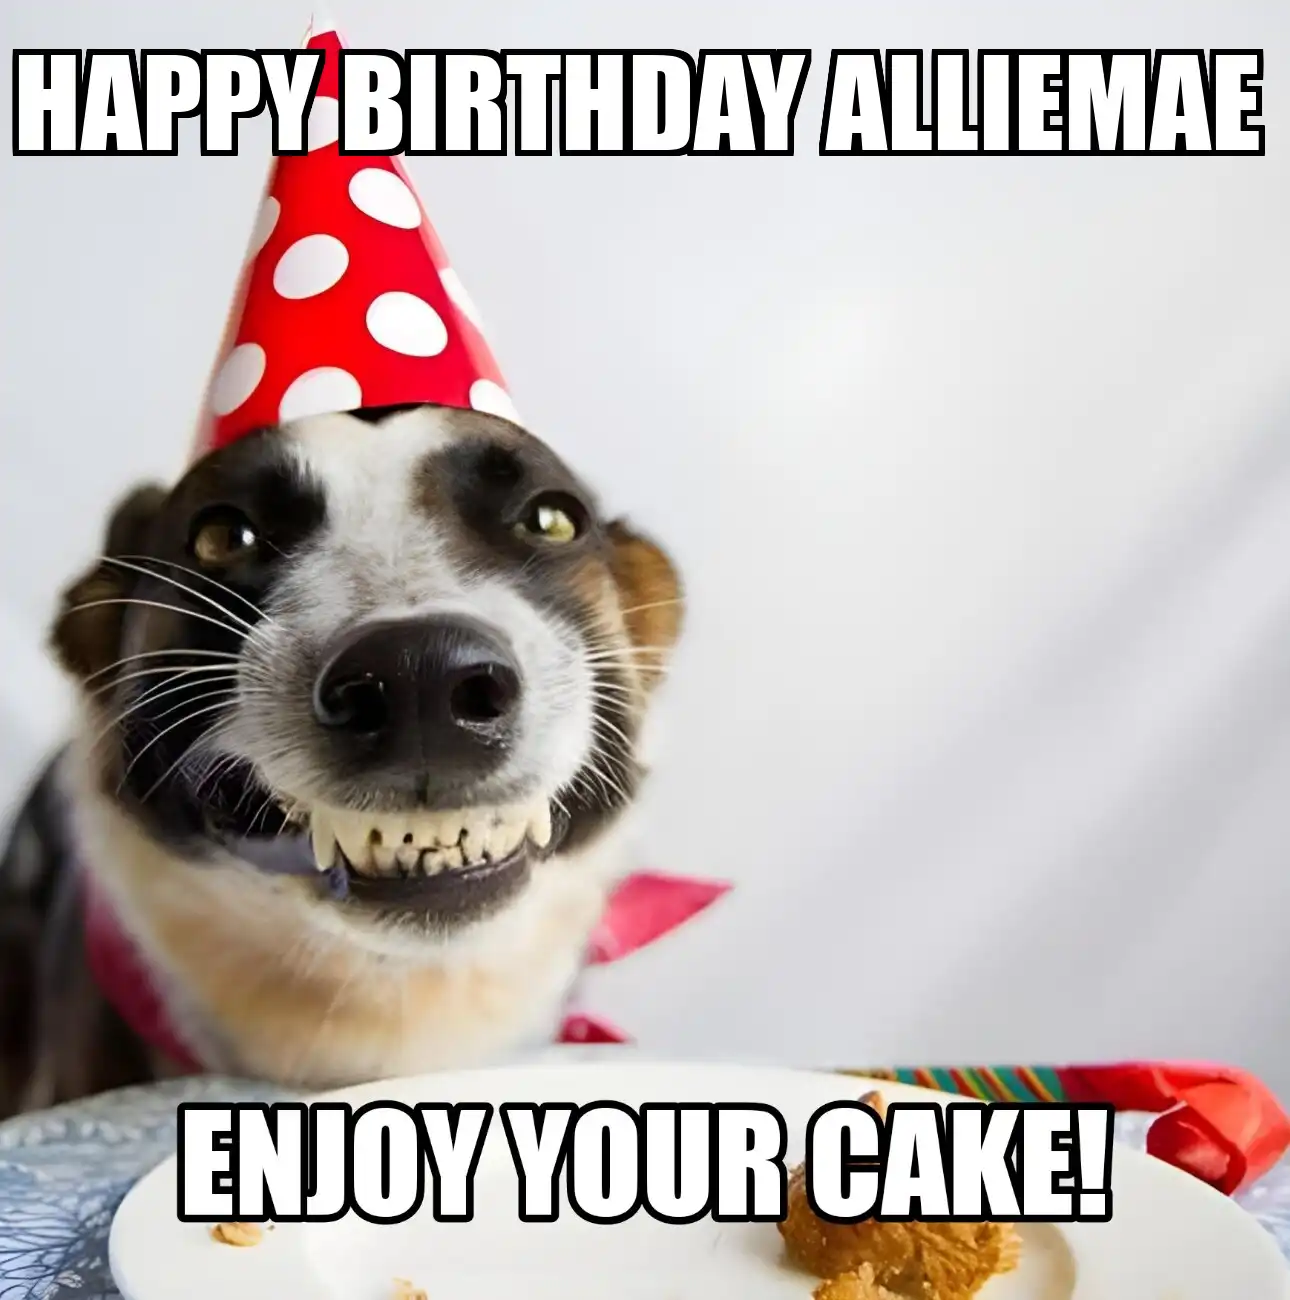 Happy Birthday Alliemae Enjoy Your Cake Dog Meme